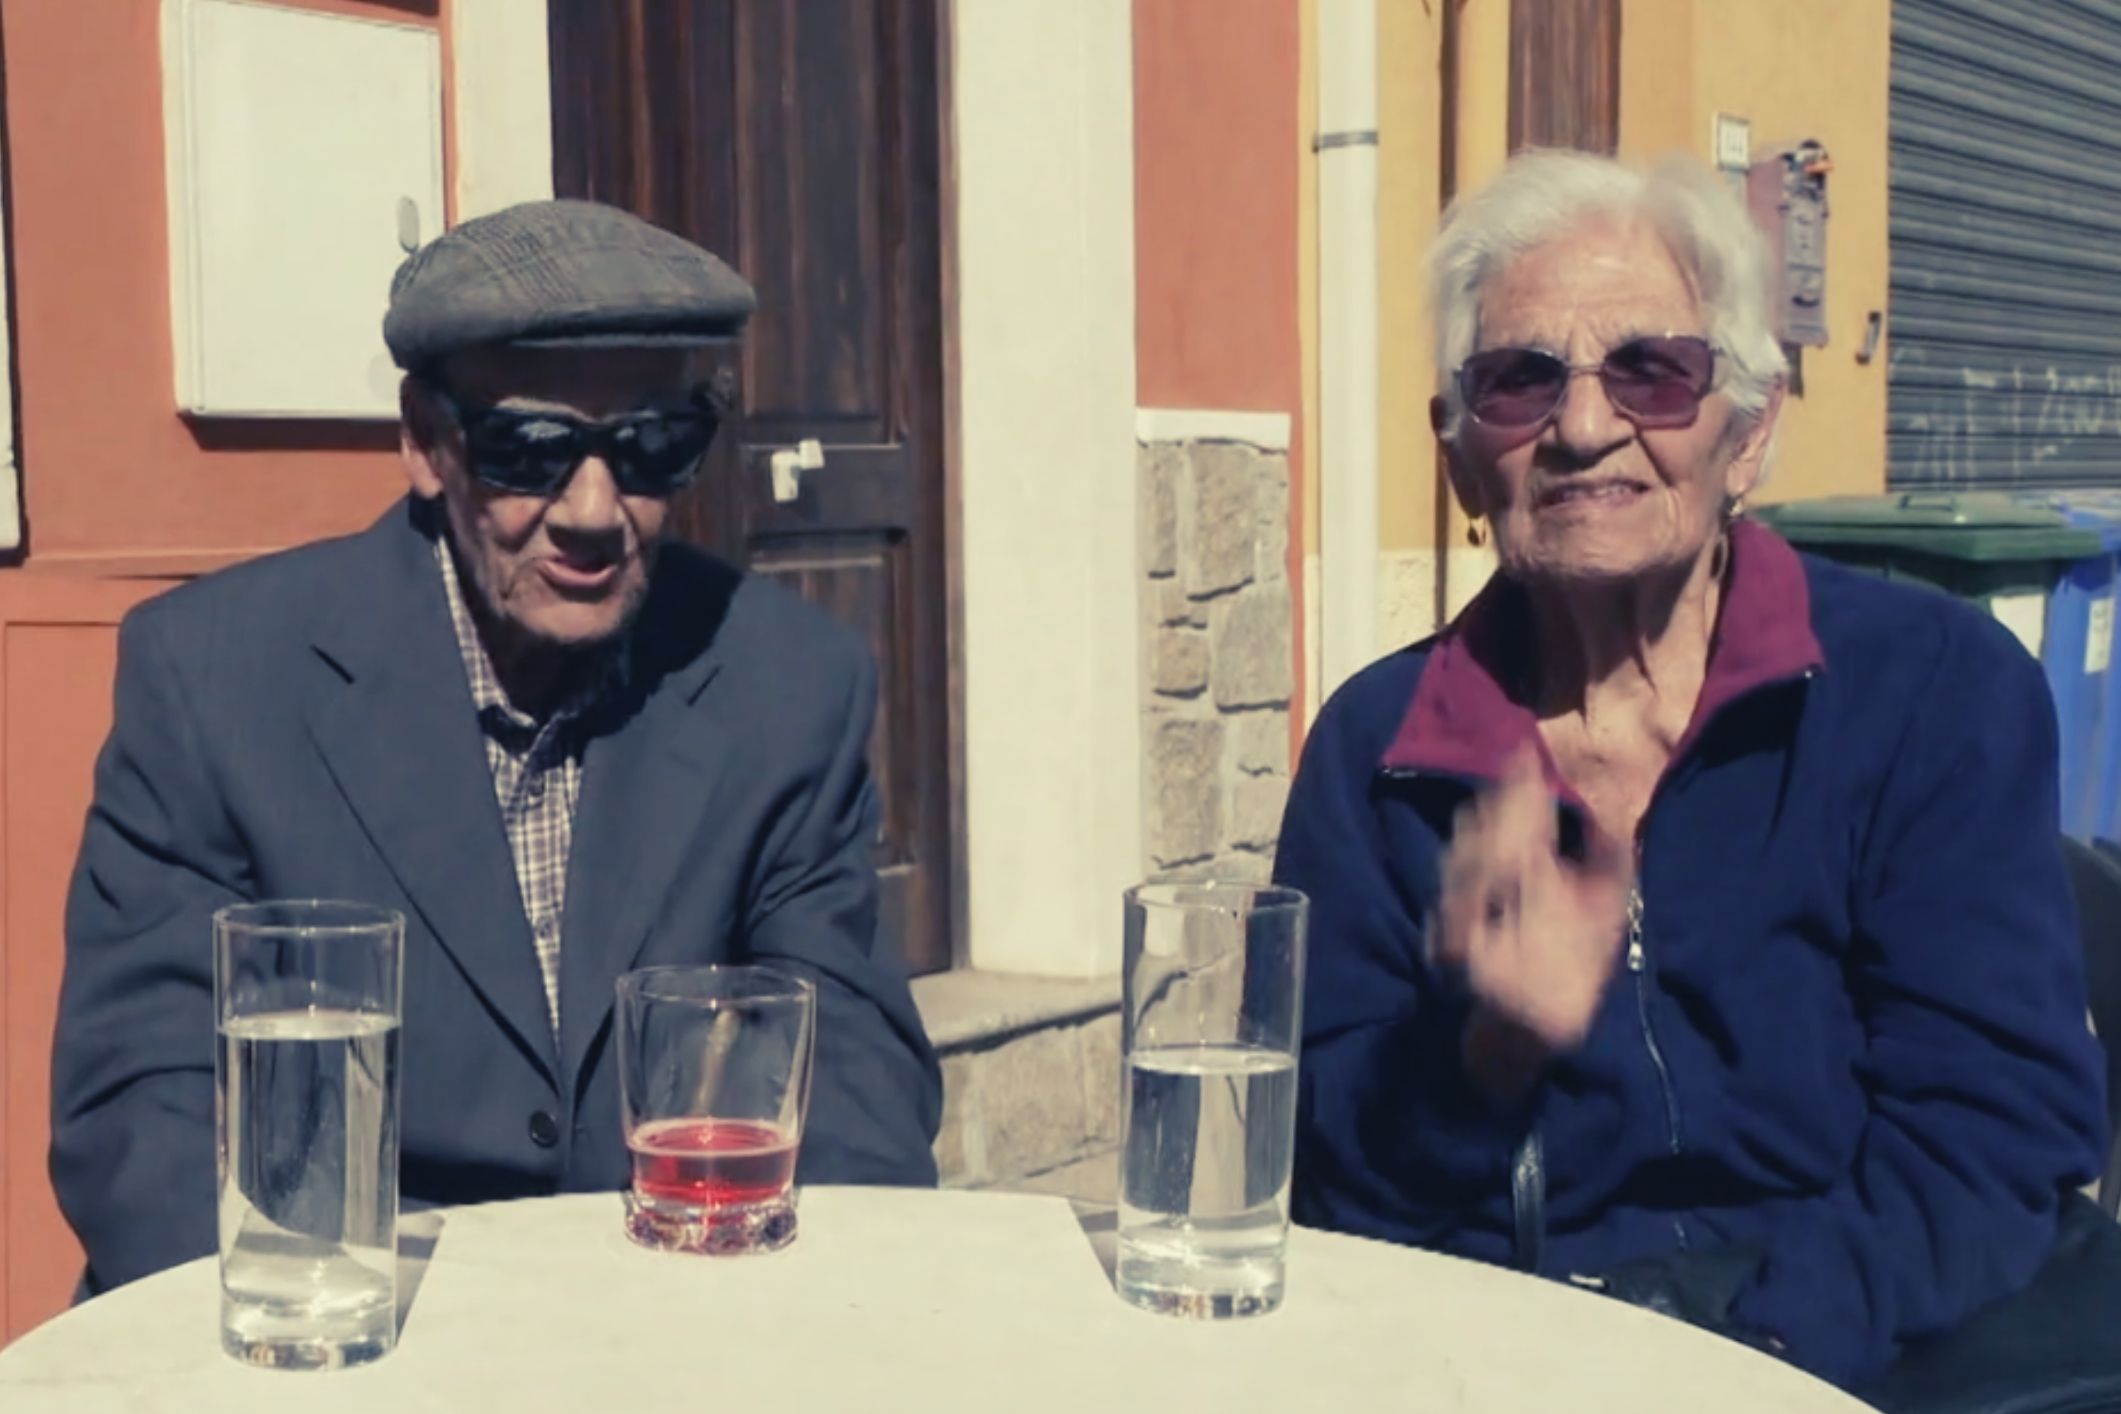 Italian centenarians